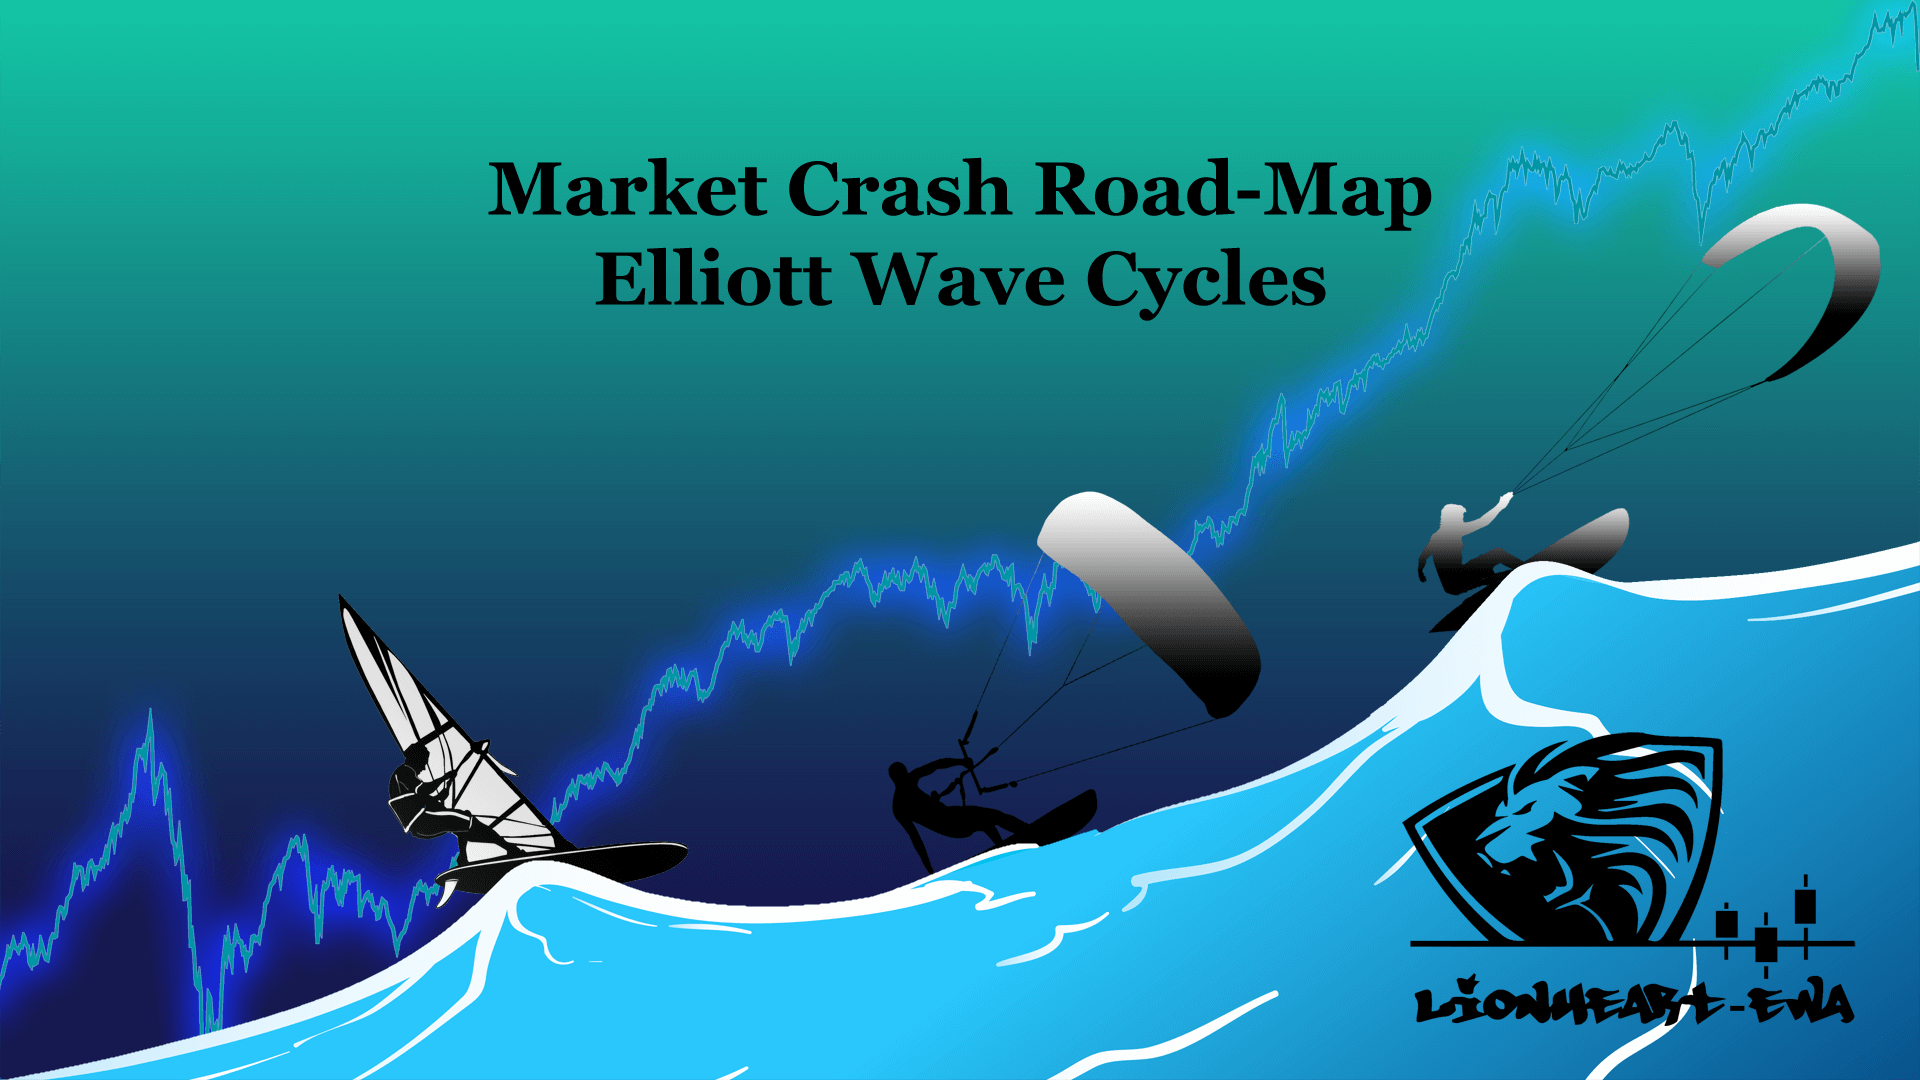 Market-Crash-Roadmap-Elliott-Wave-Cycles-Indices-Macro